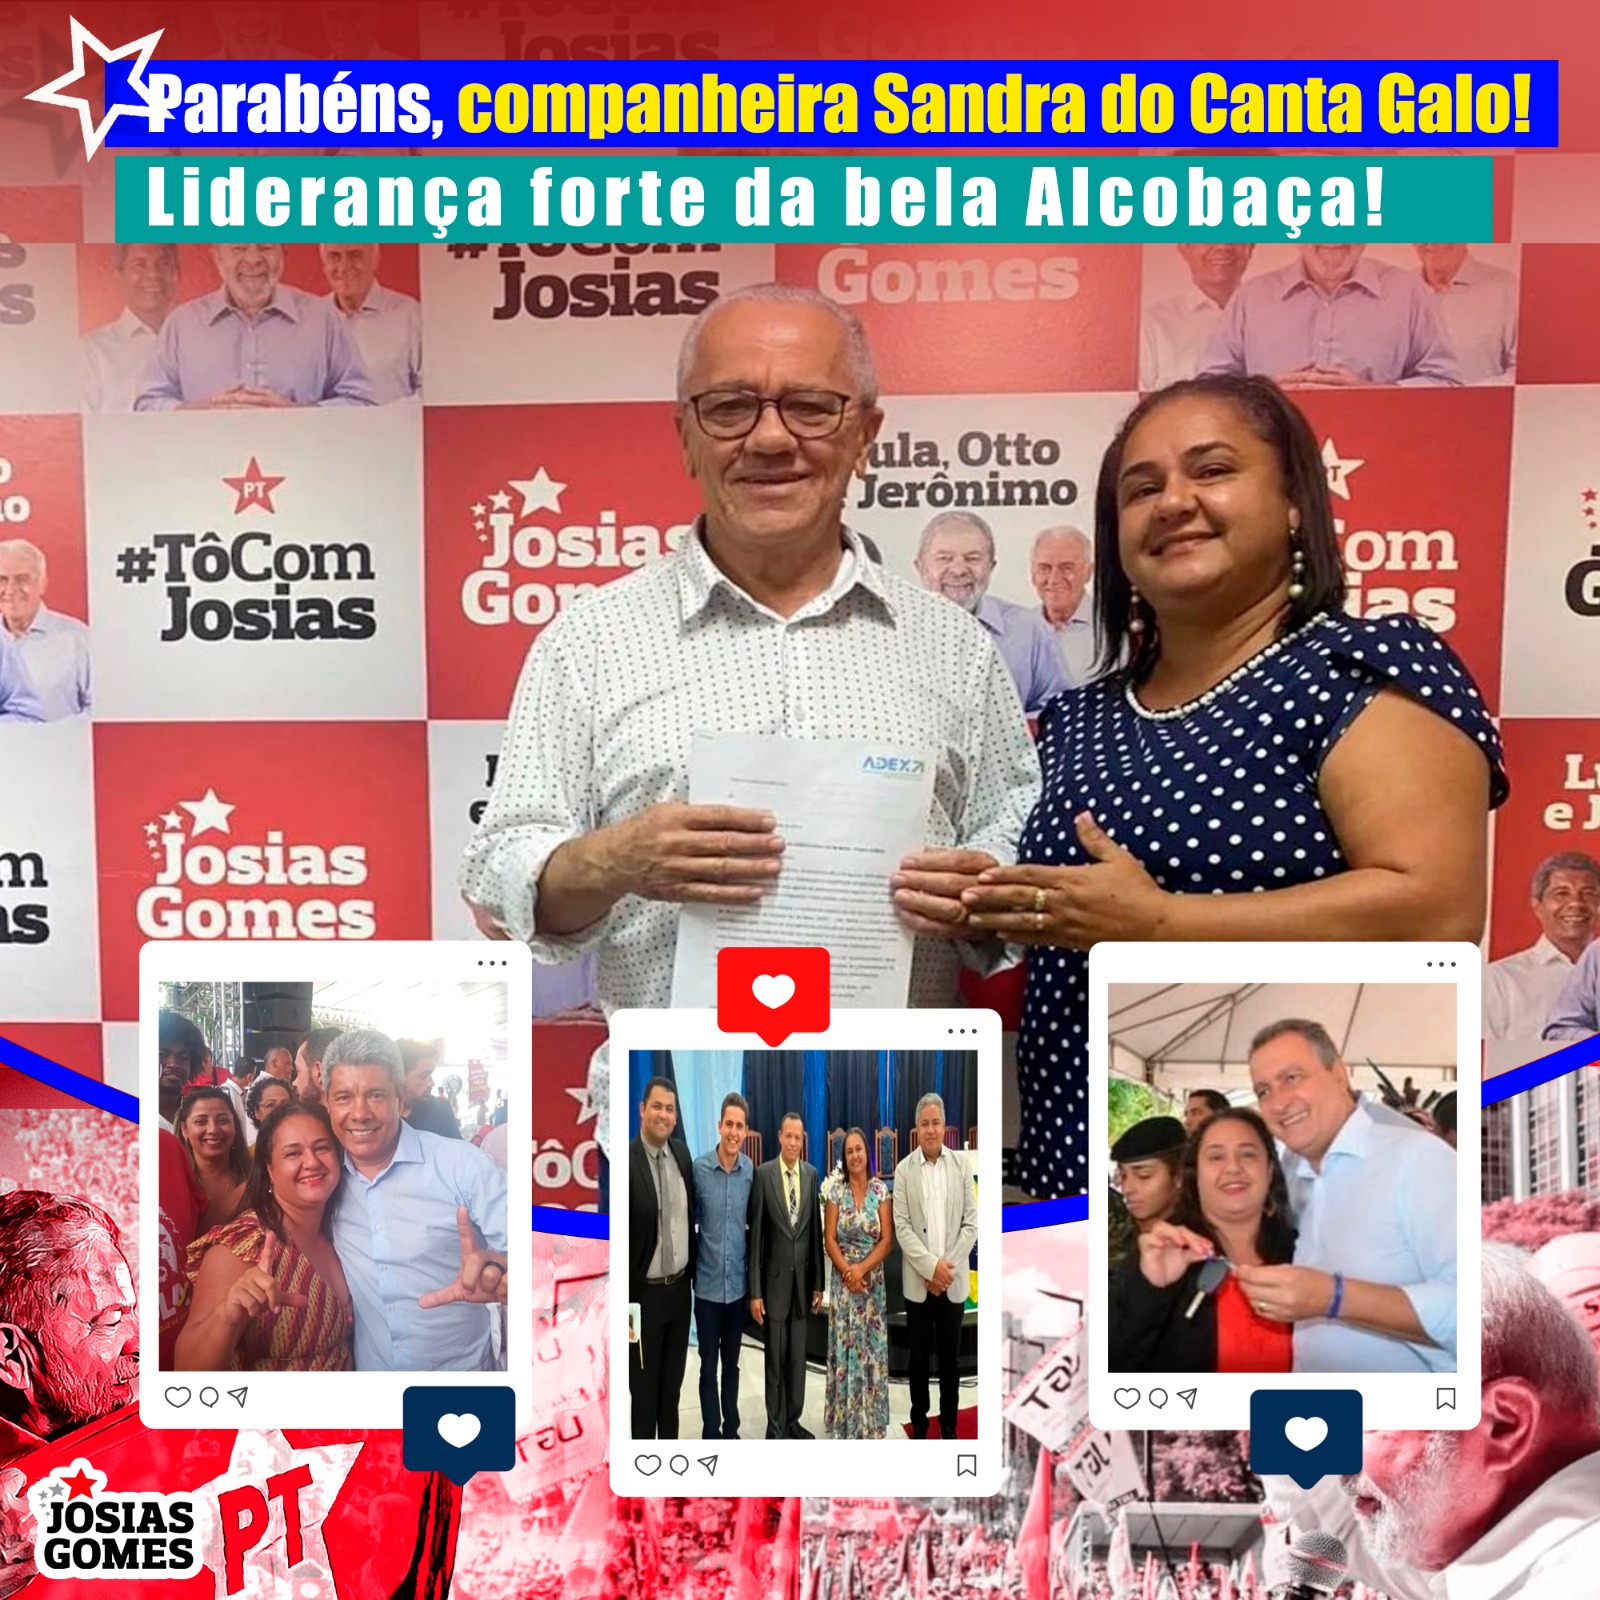 Parabéns, Companheira Sandra Canta Galo